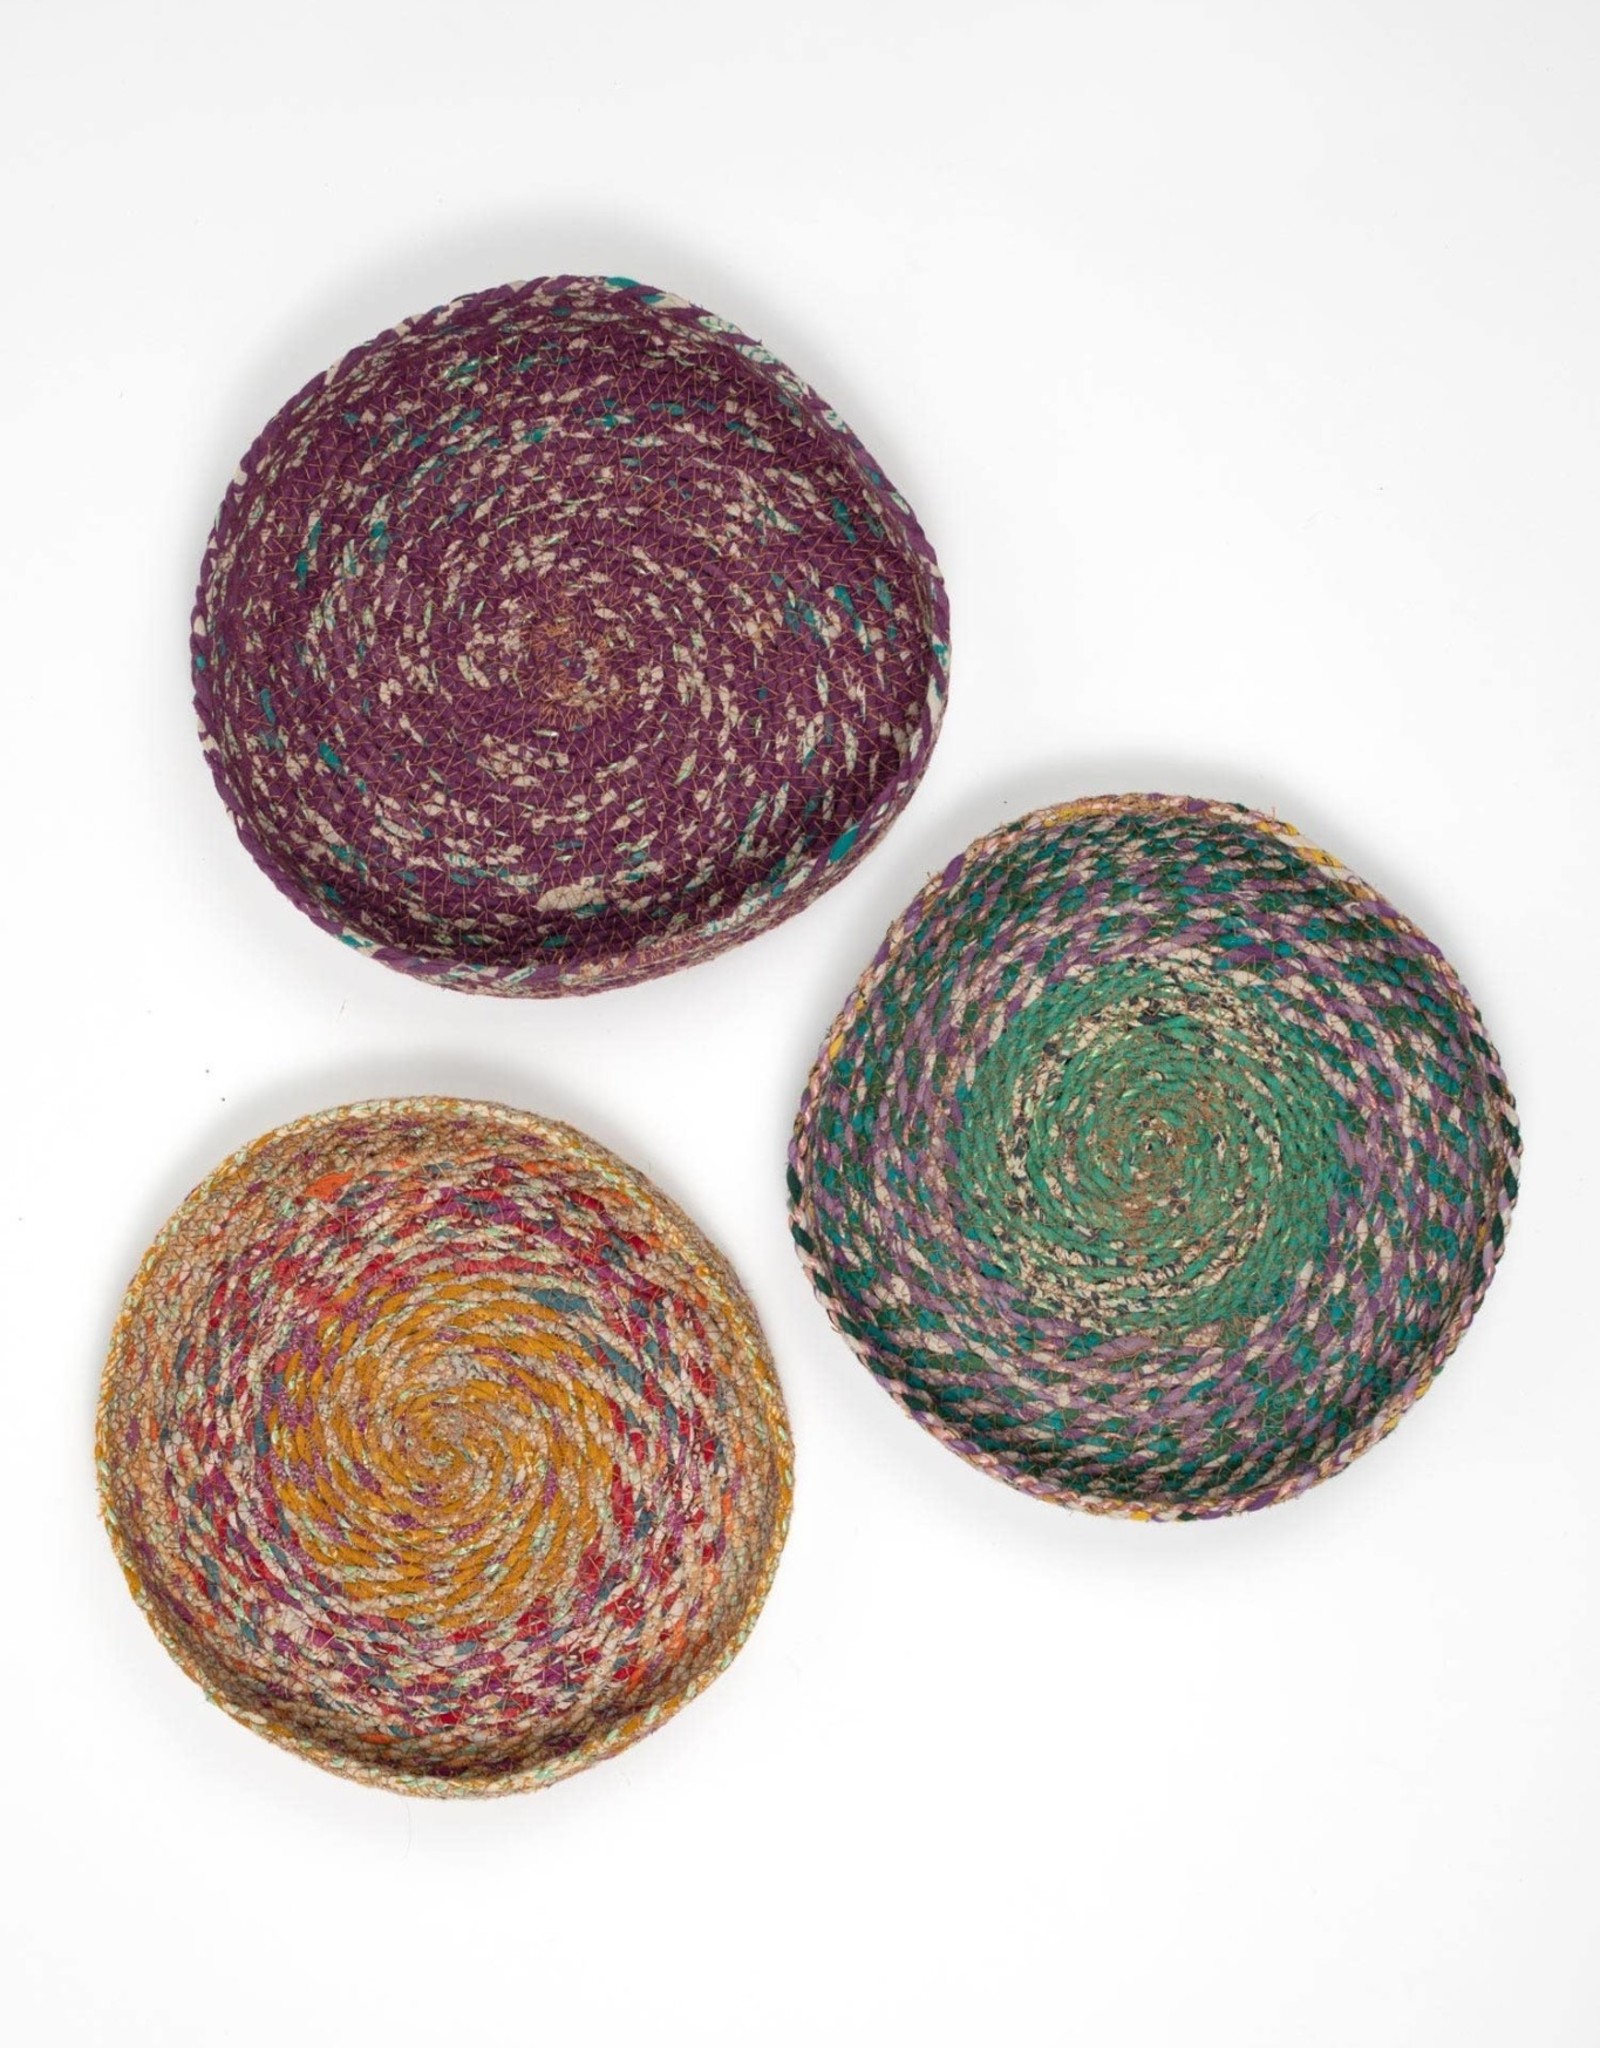 Ten Thousand Villages Stitched Sari Fabric Tray - 10"